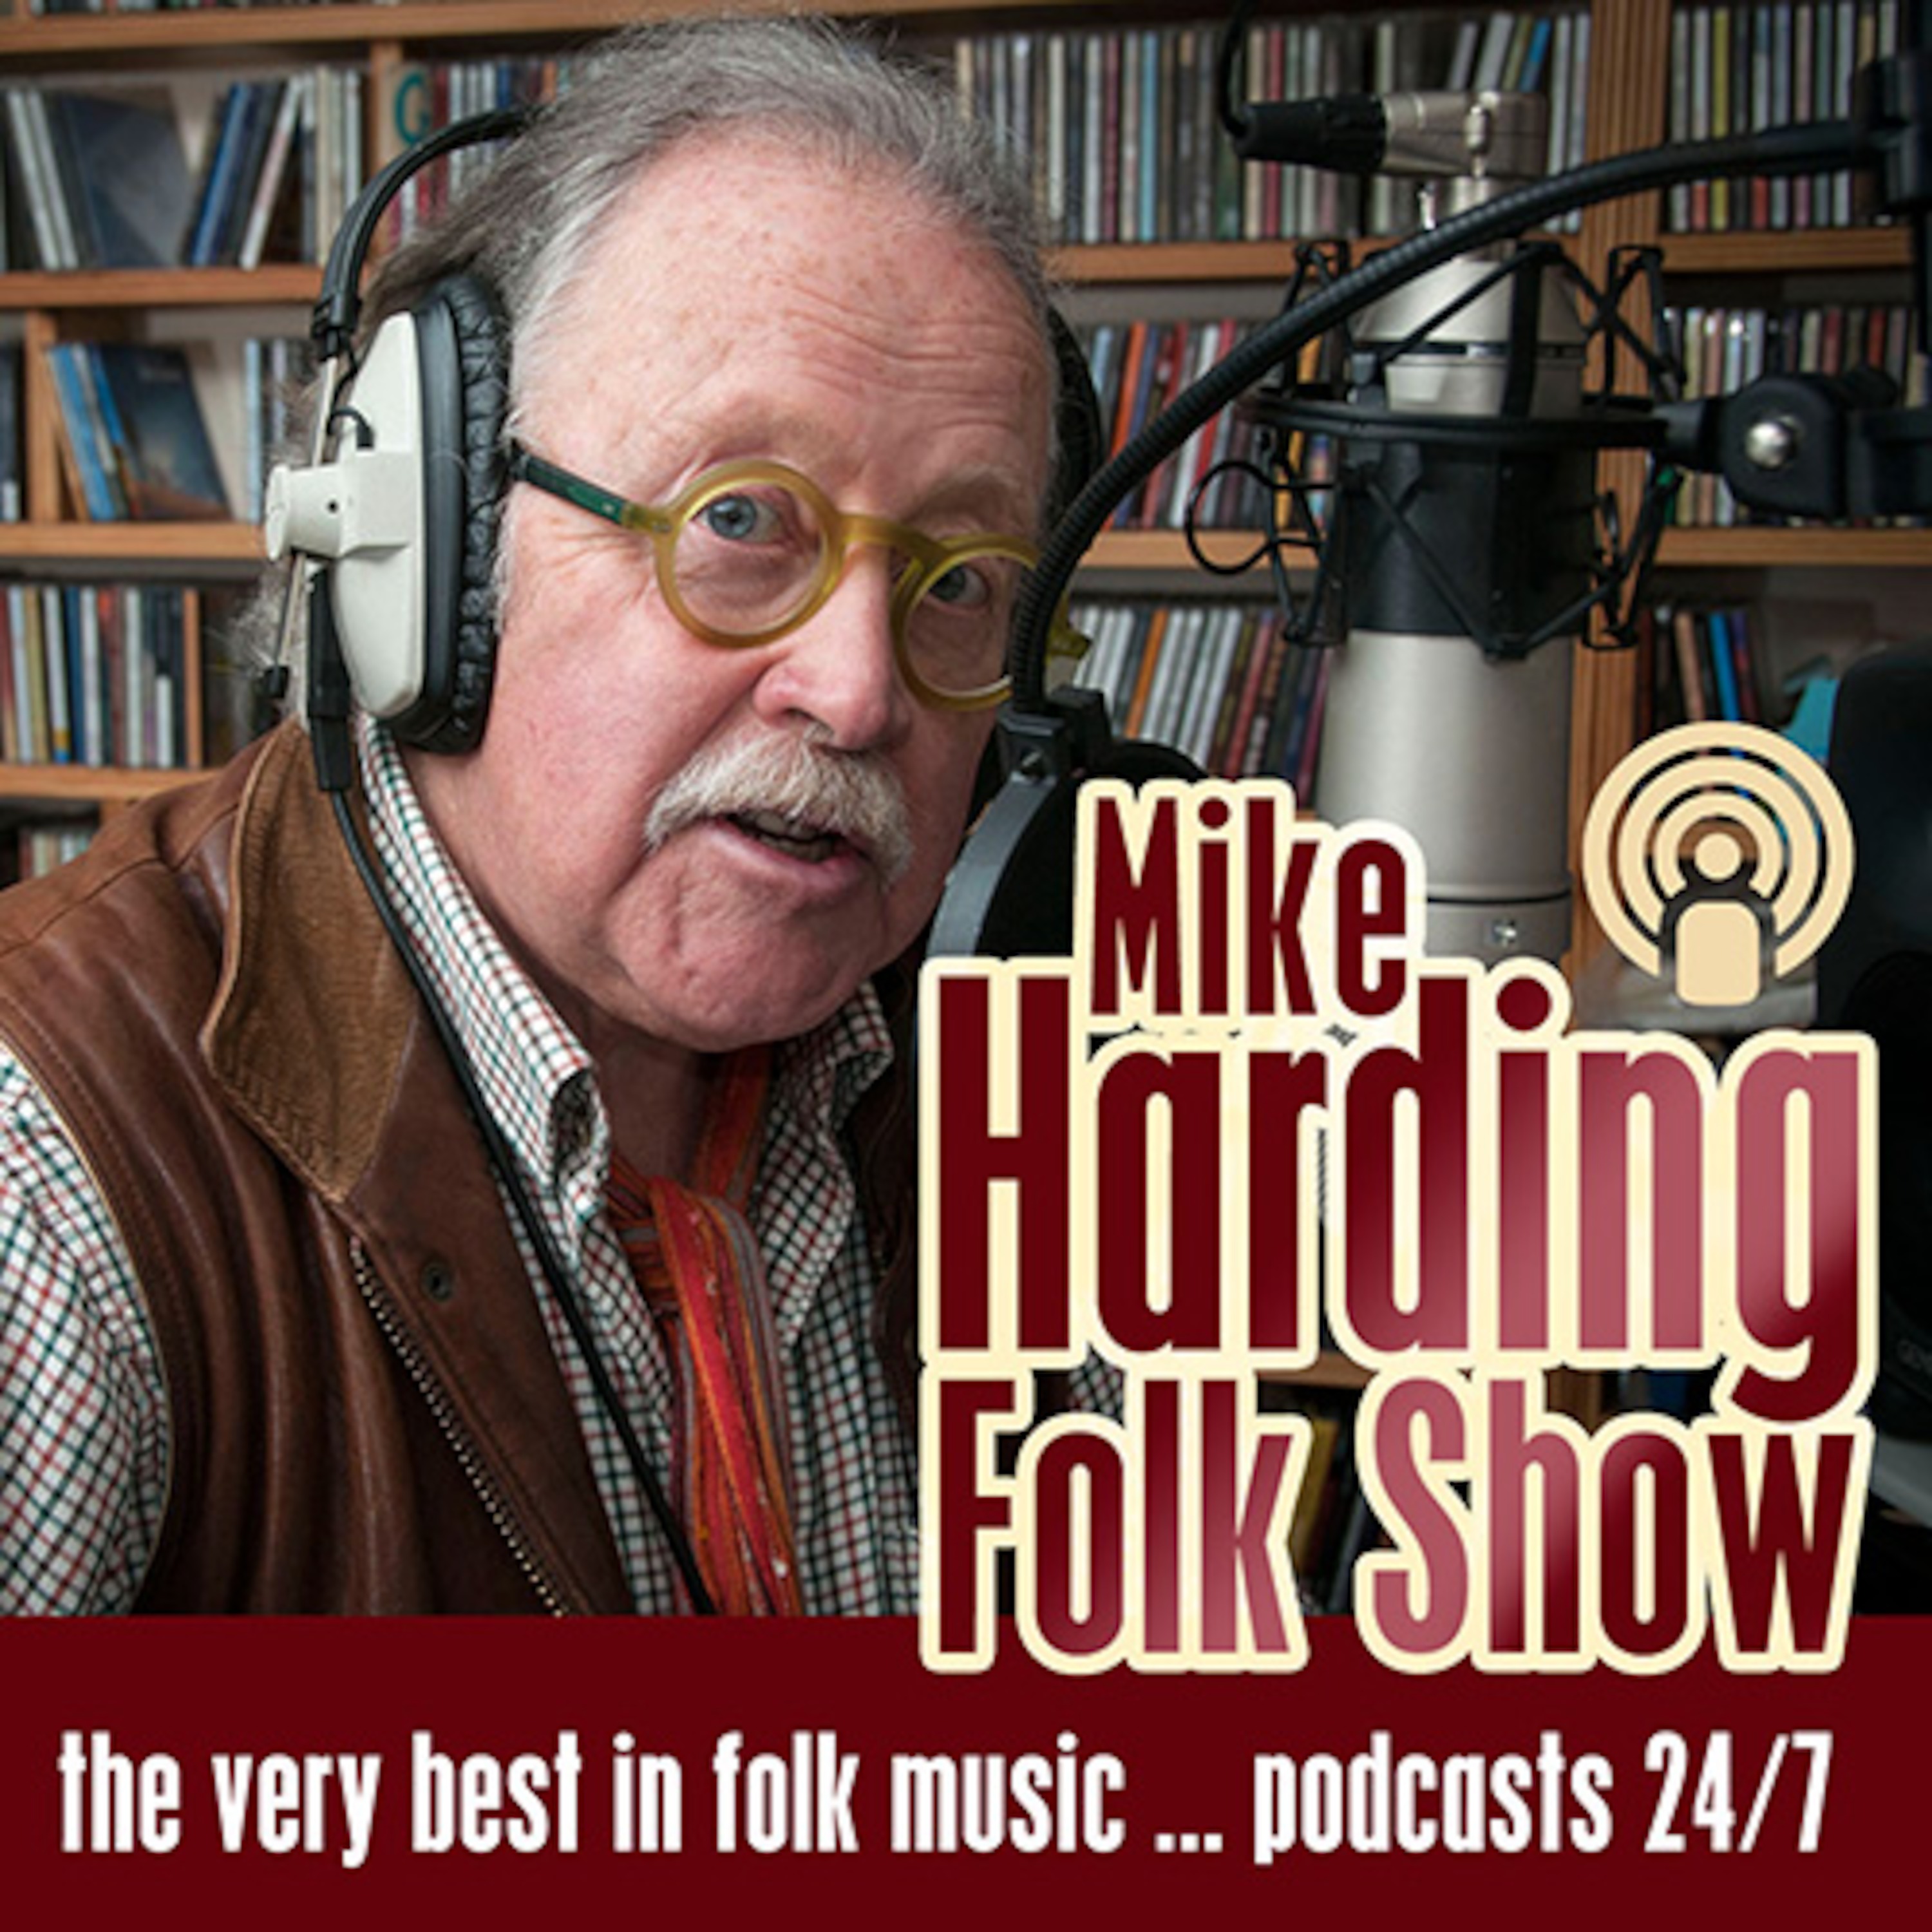 Mike Harding Folk Show 149